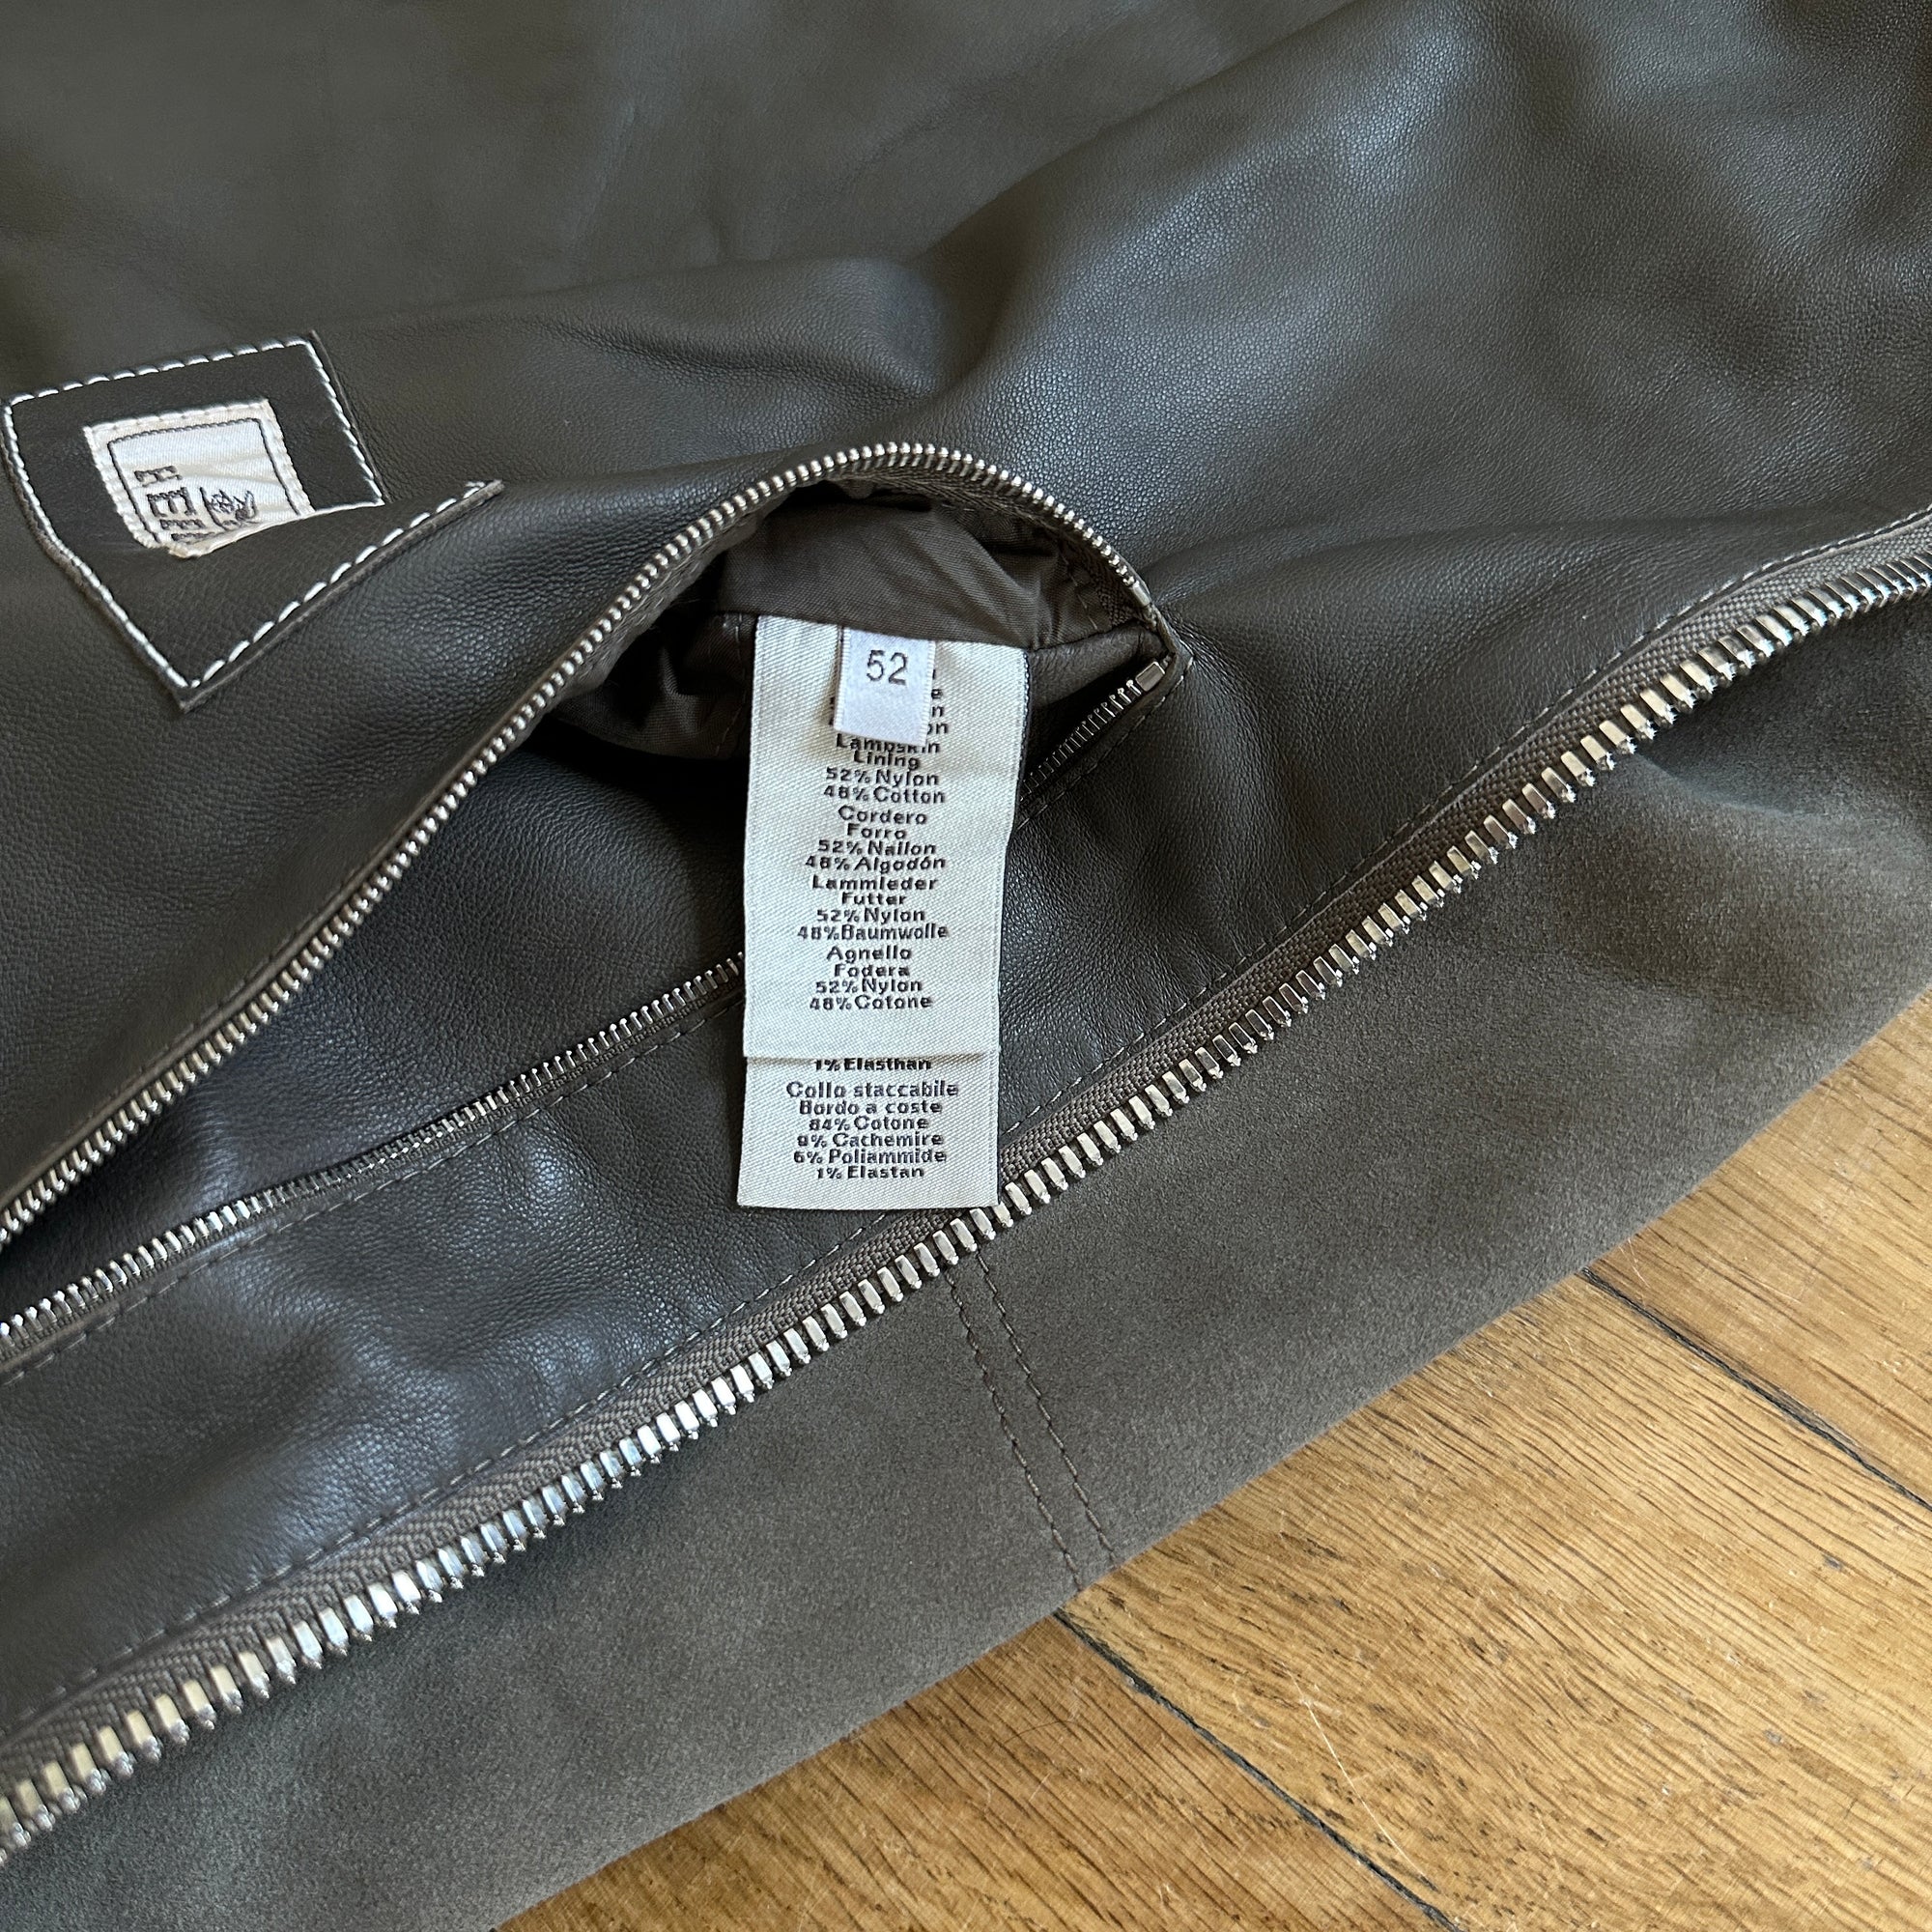 Hermès Suede Leather Blouson With Detachable Collar